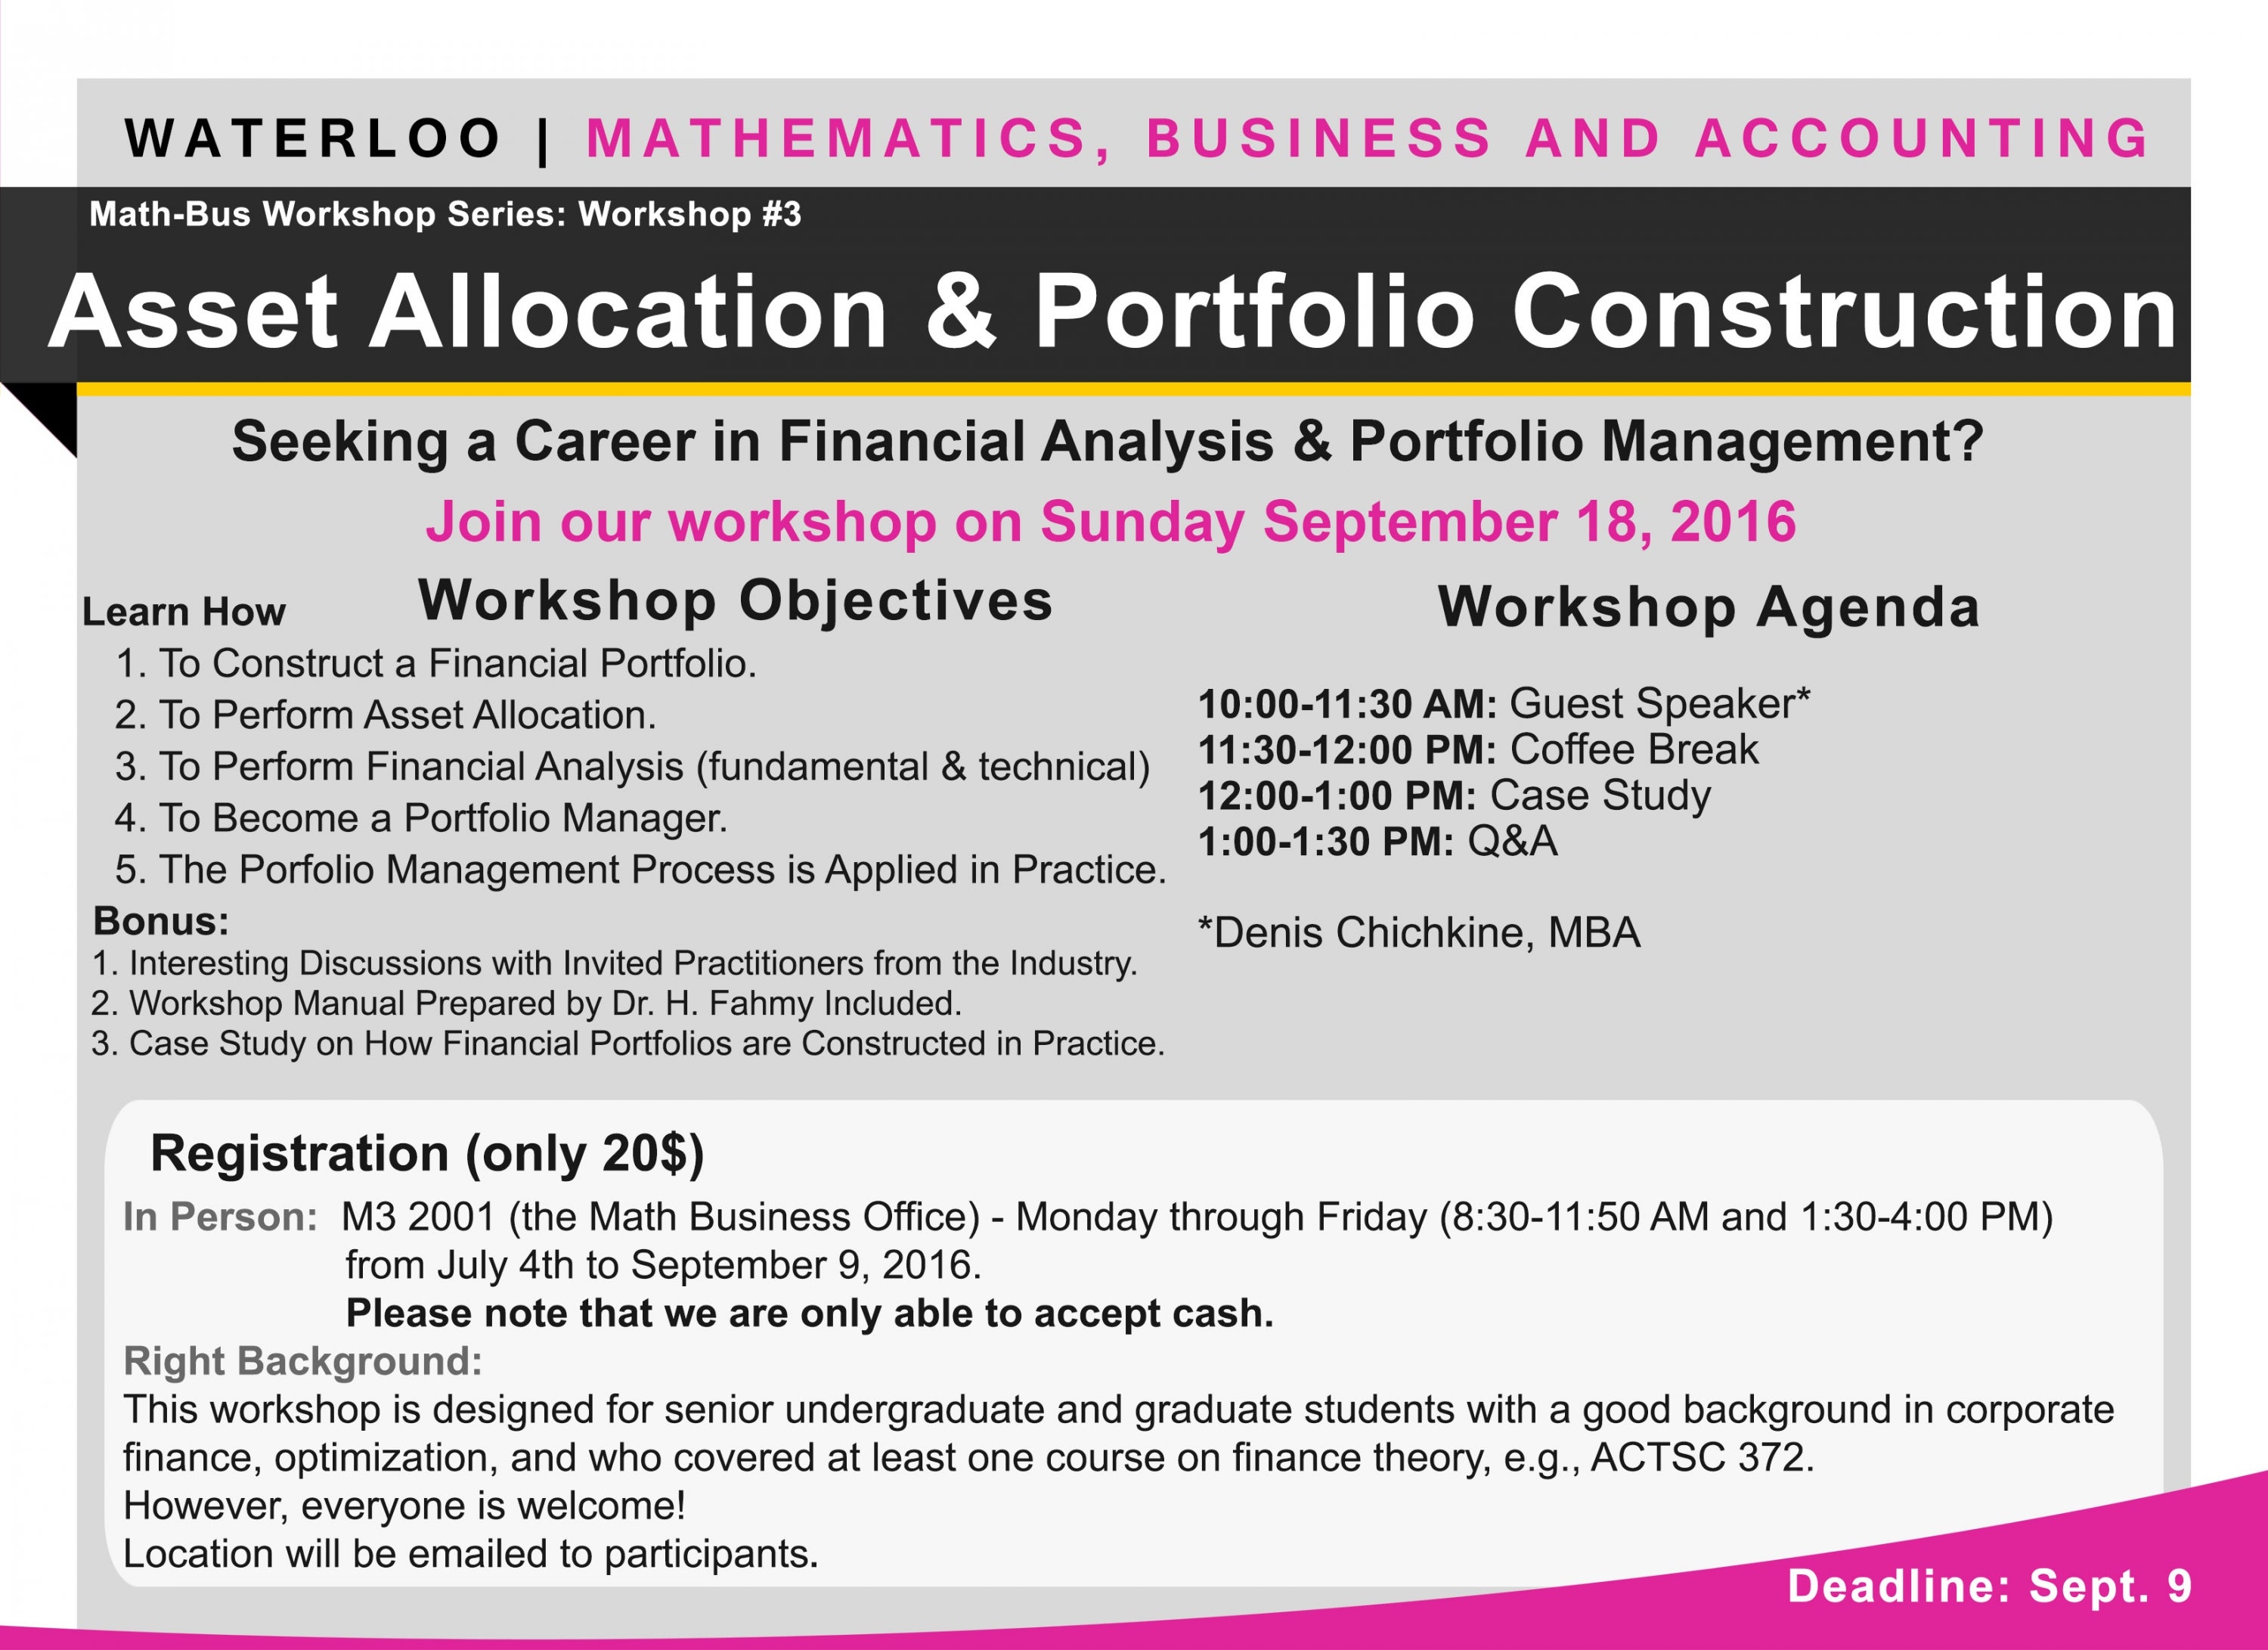 Asset Allocation and Portfolio Construction Workshop Information Poster